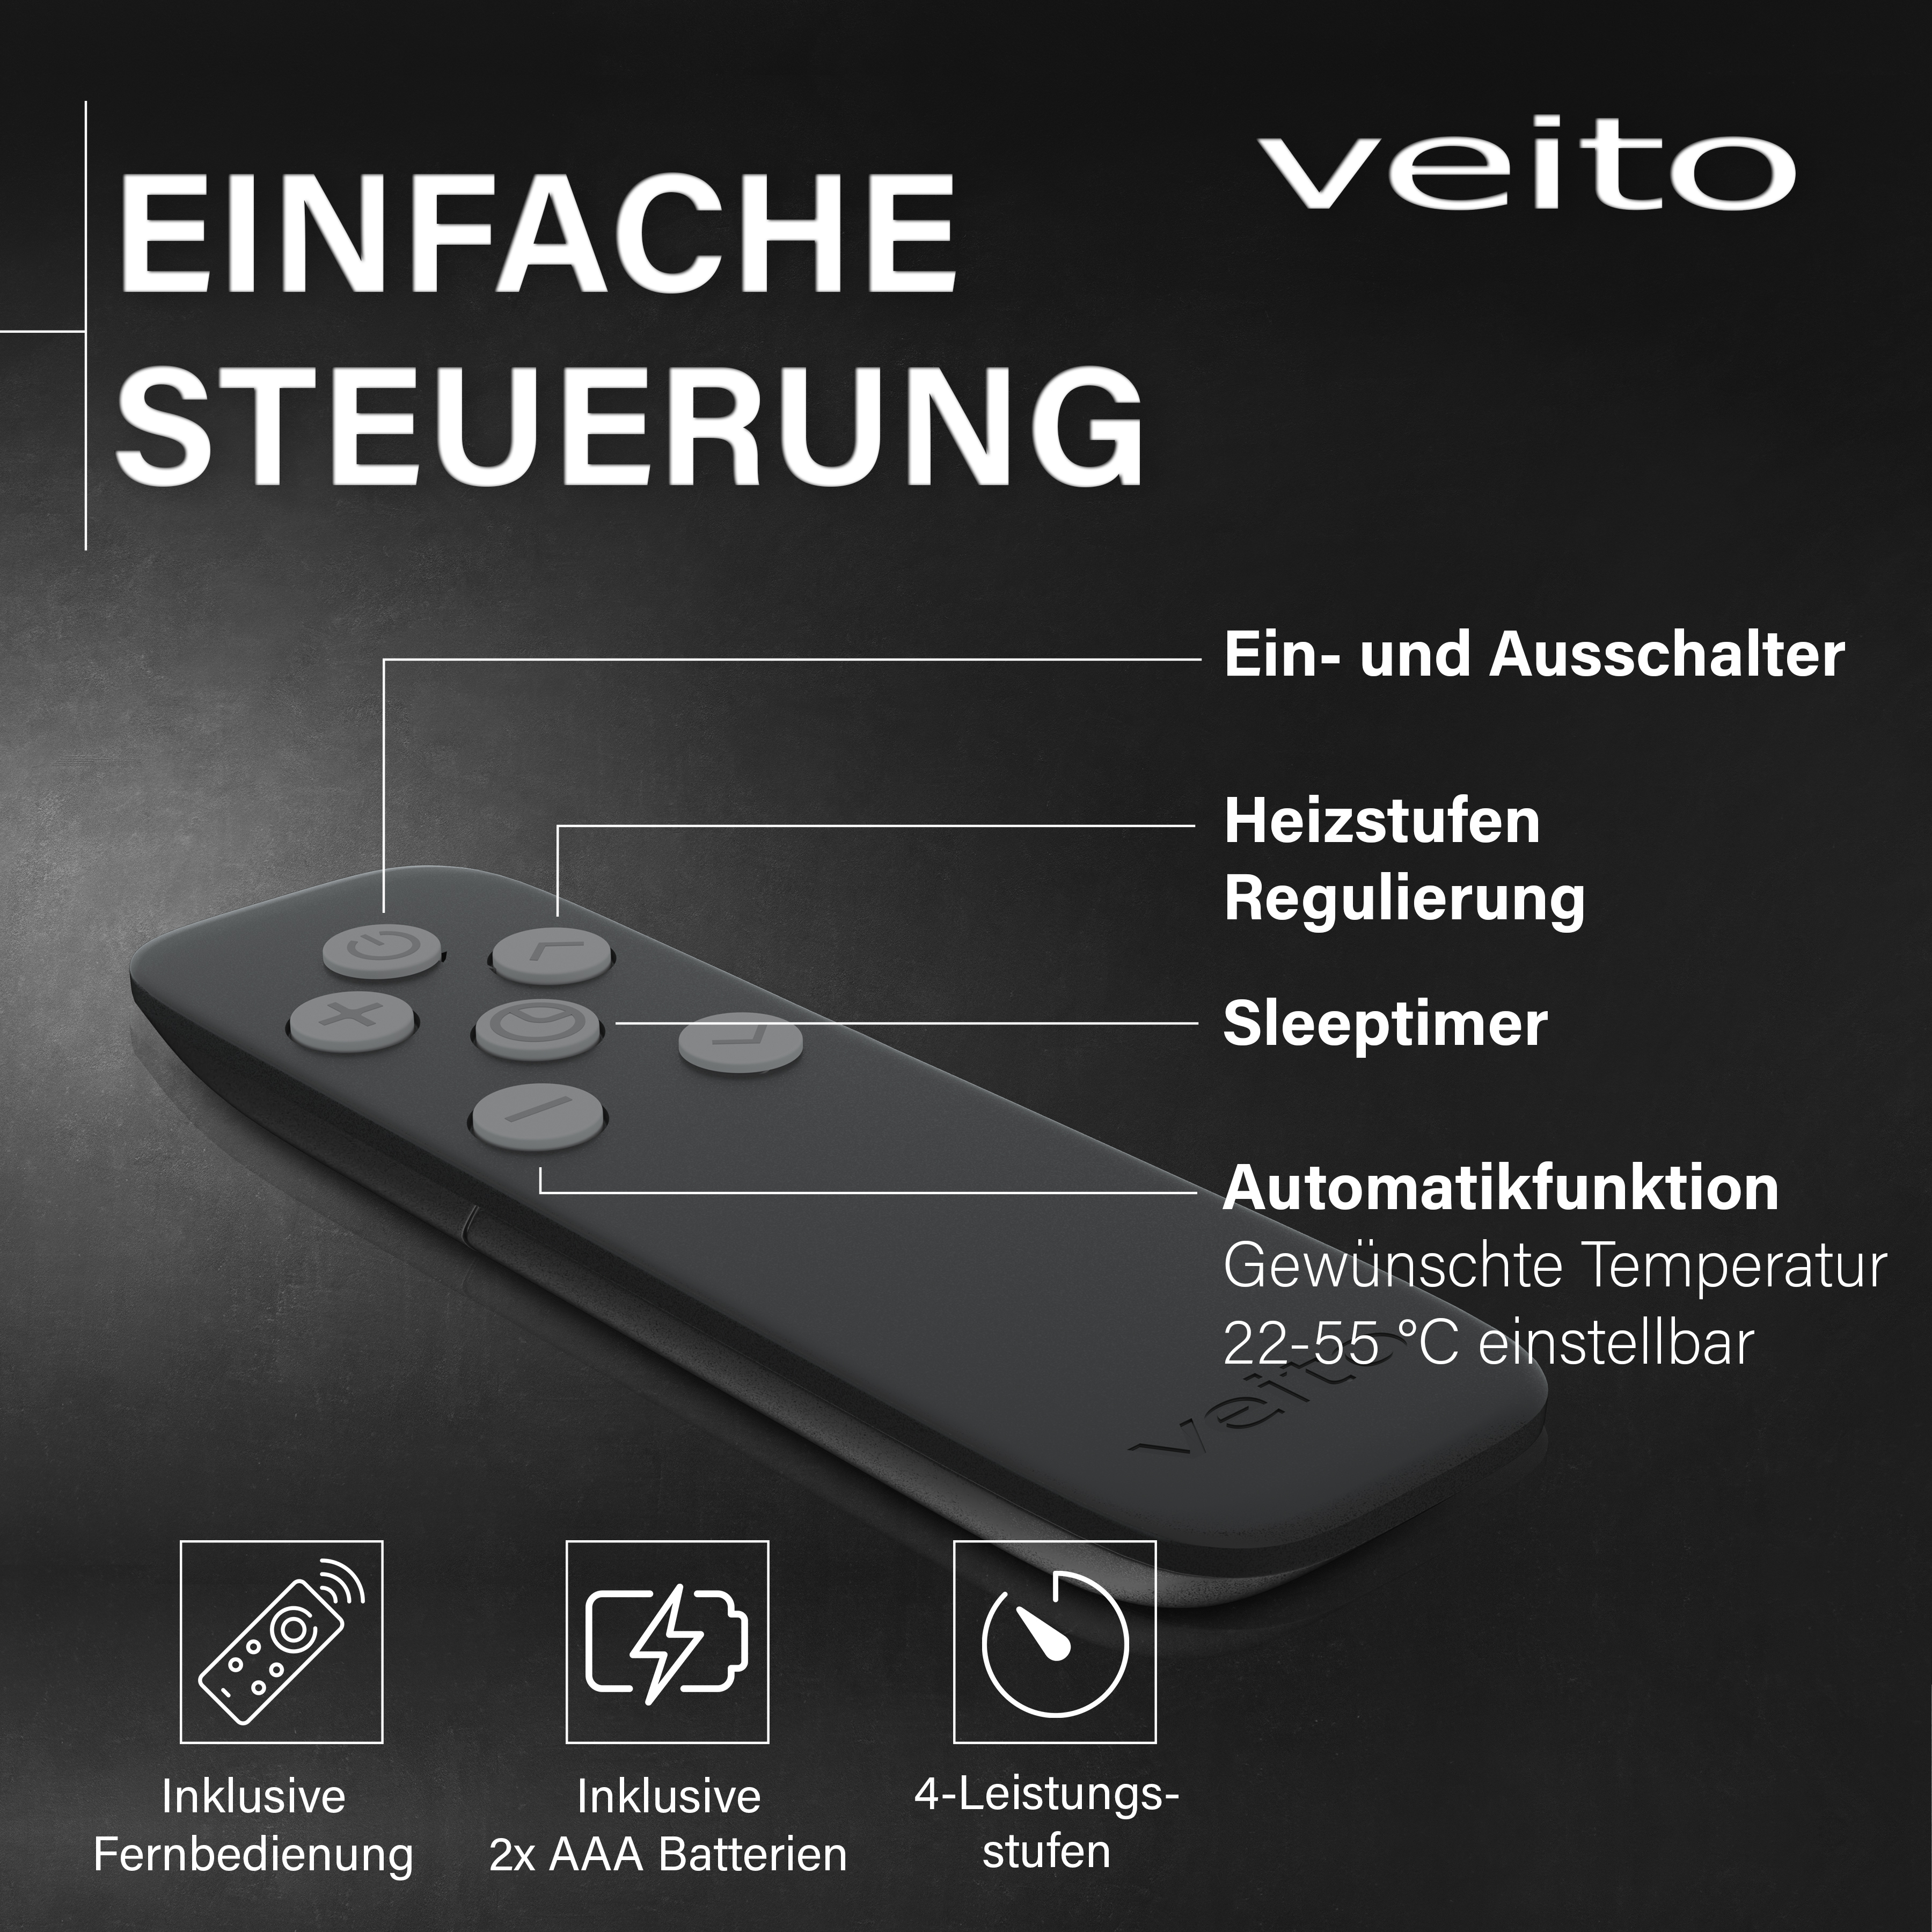 VEITO Blade S - Heizstrahler Infrarot Black (2500 Watt) Edition